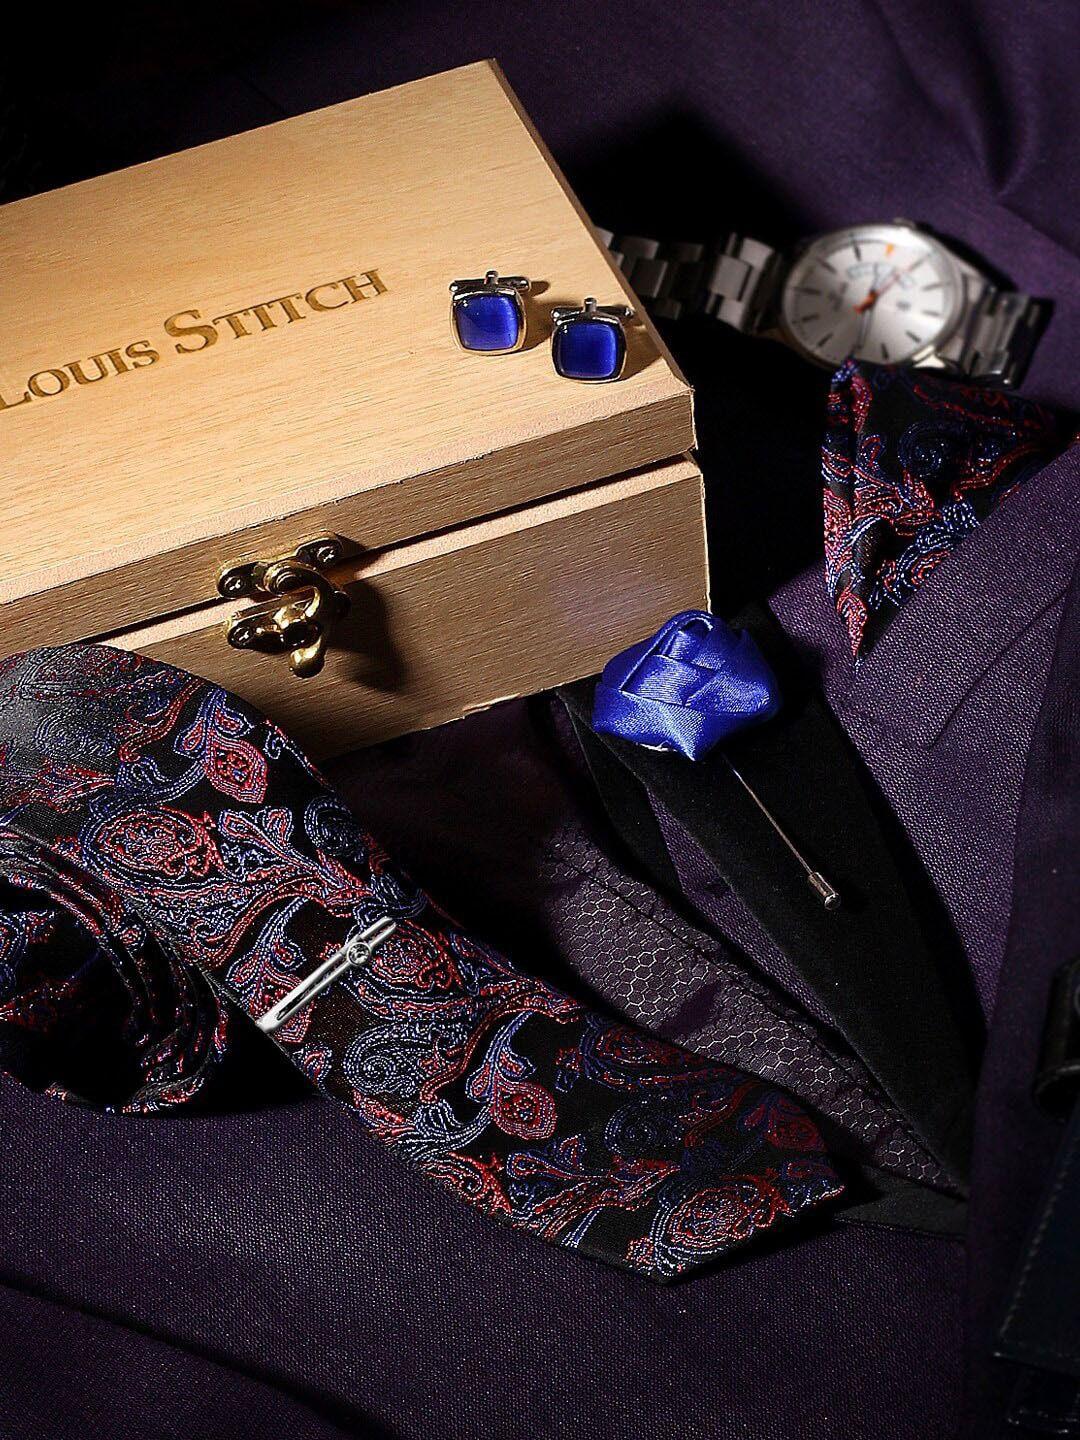 louis stitch men accessory gift set